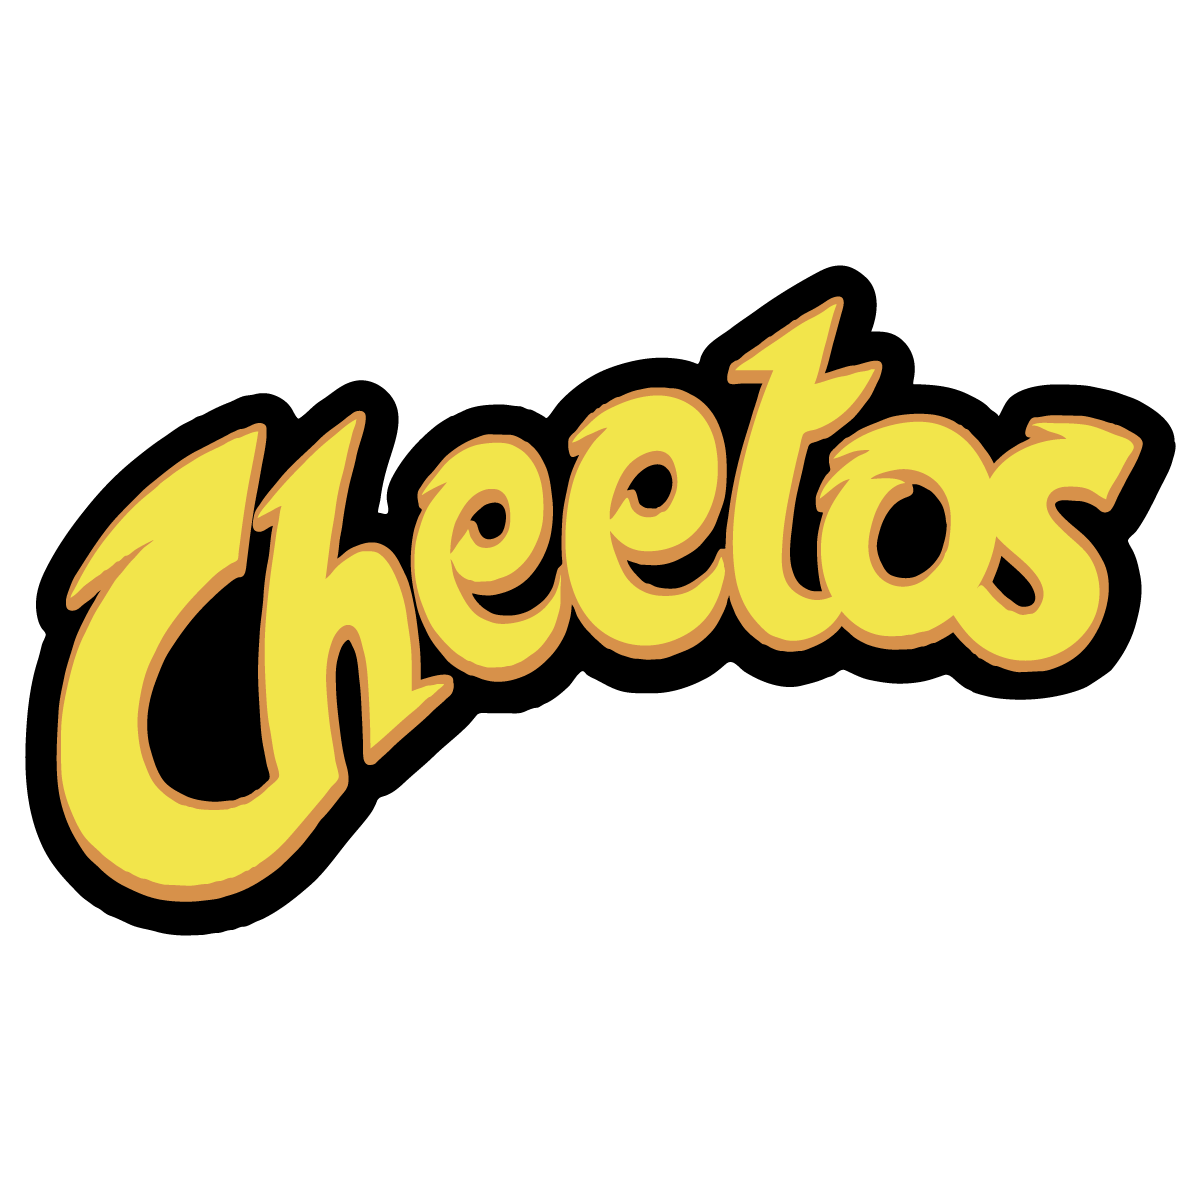 Cheetos Logo PNG Pic